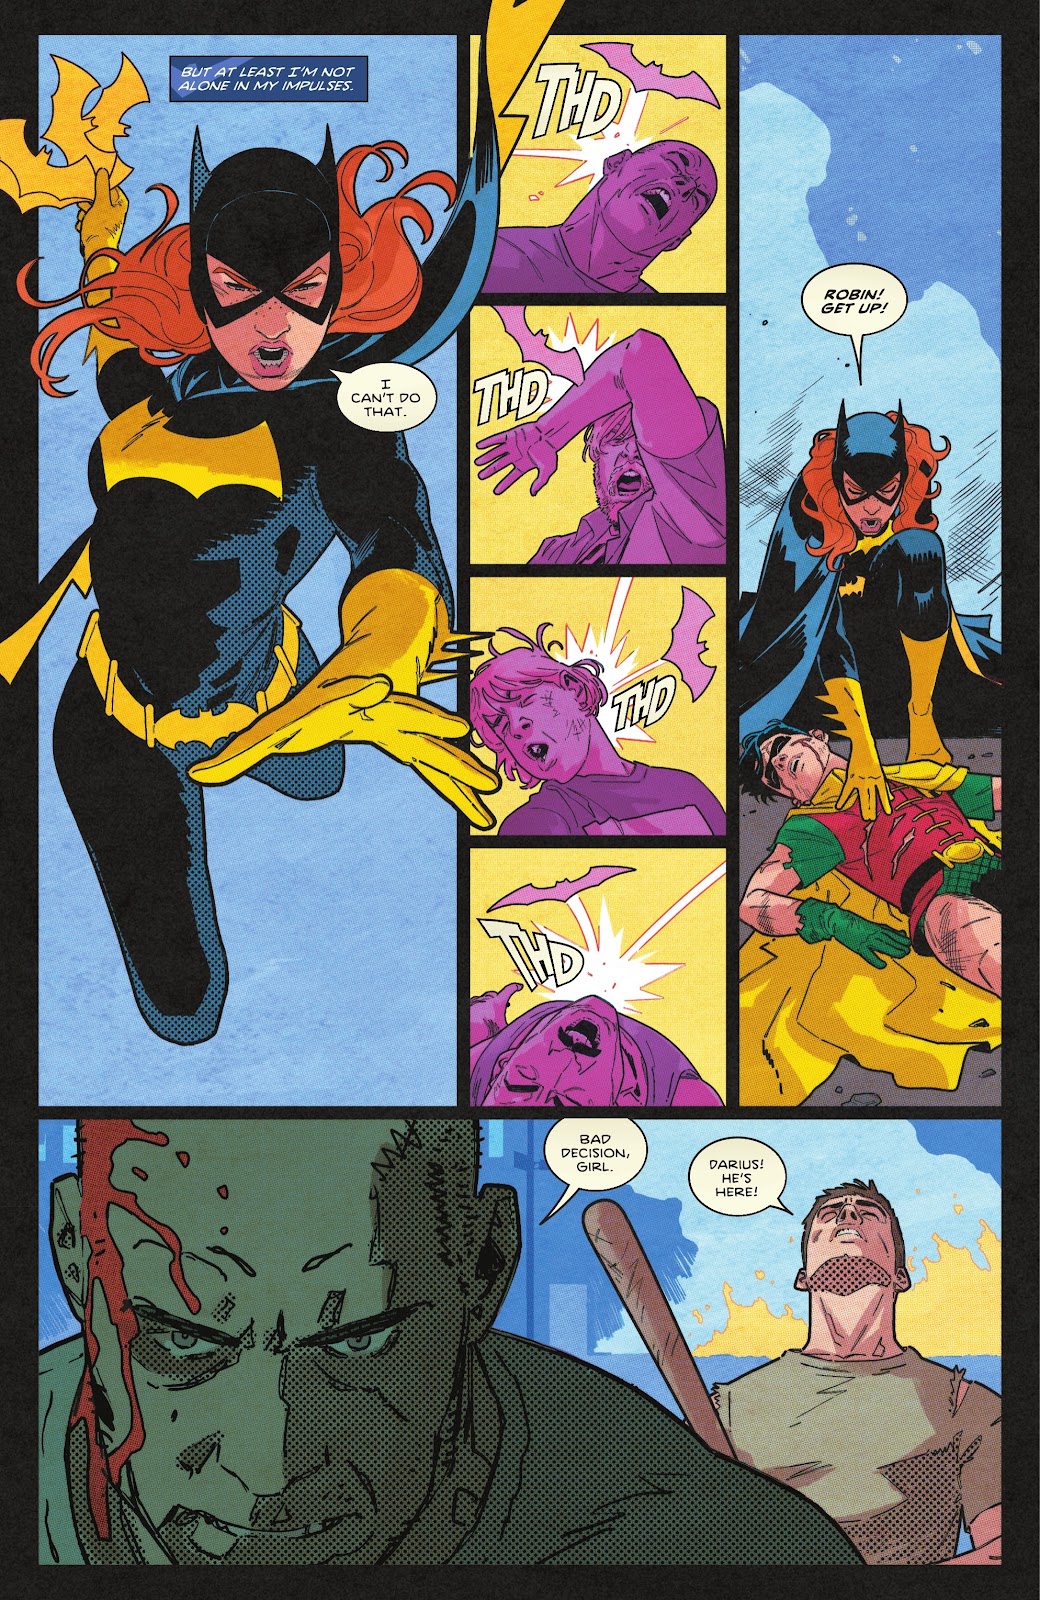 Alfred Pennyworth Defends Robin From Batman